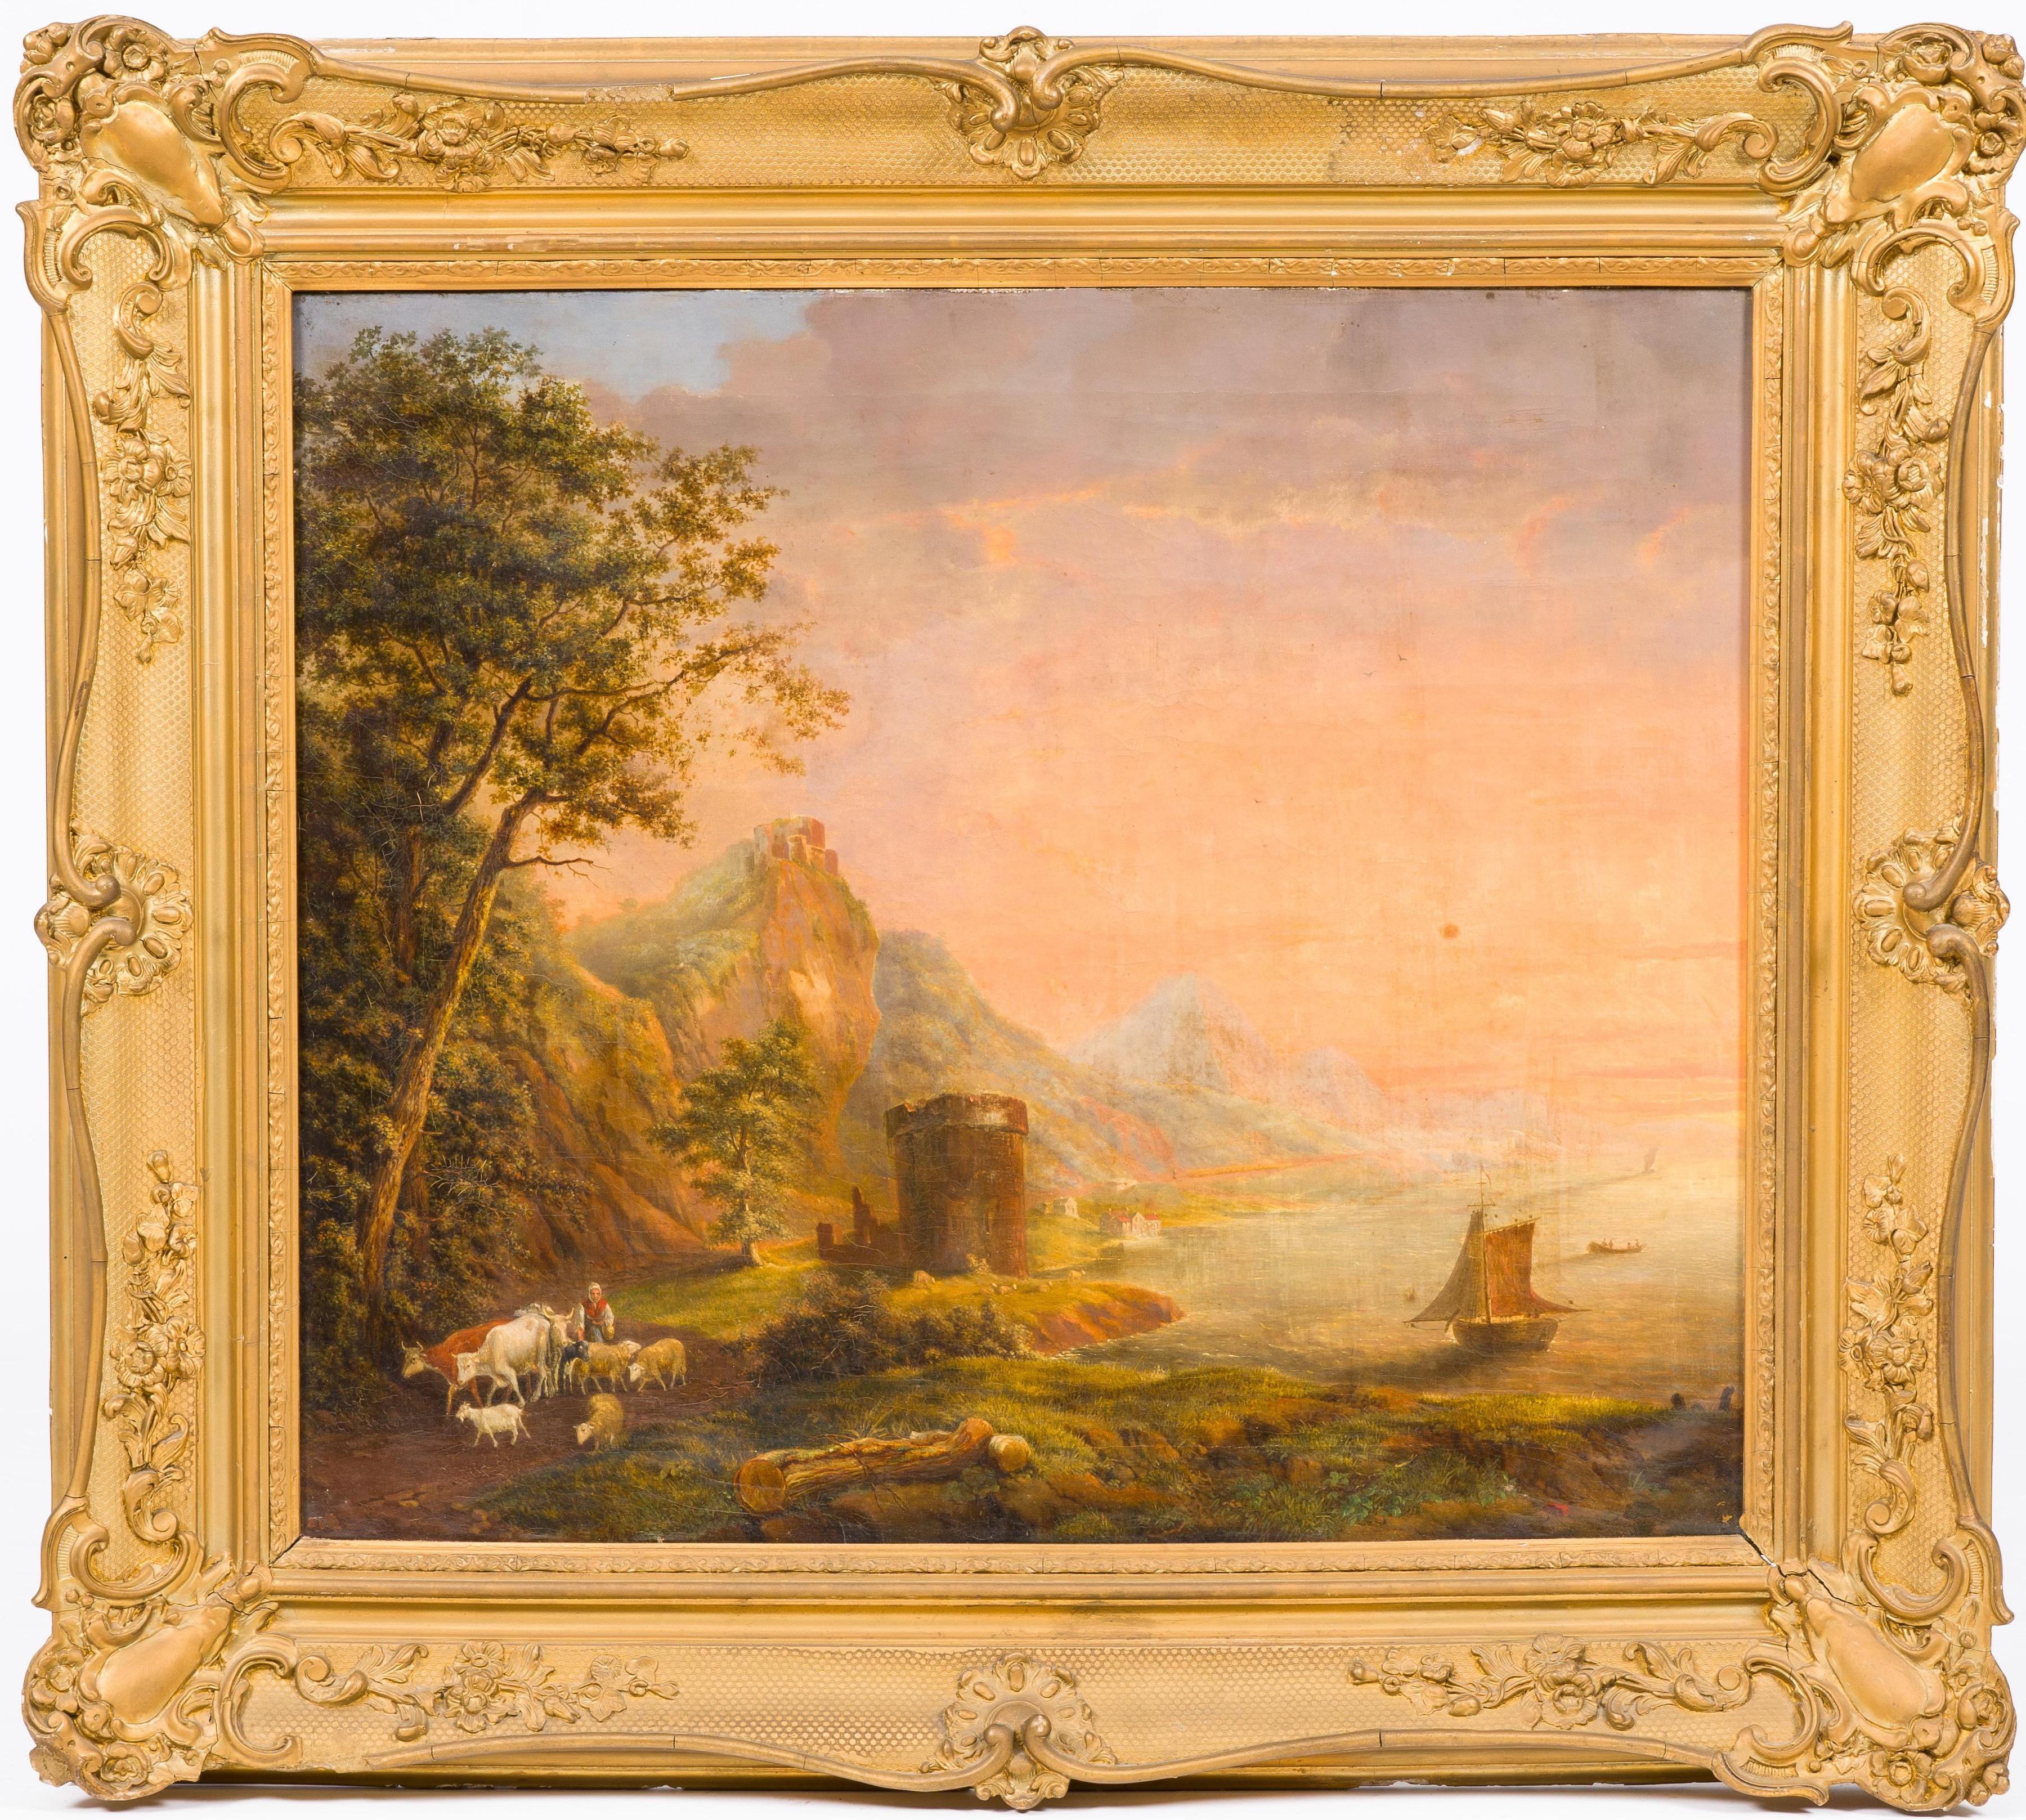 Unknown Landscape Painting - Large 19th century European romantic landscape Sunset, shepherdess and her flock